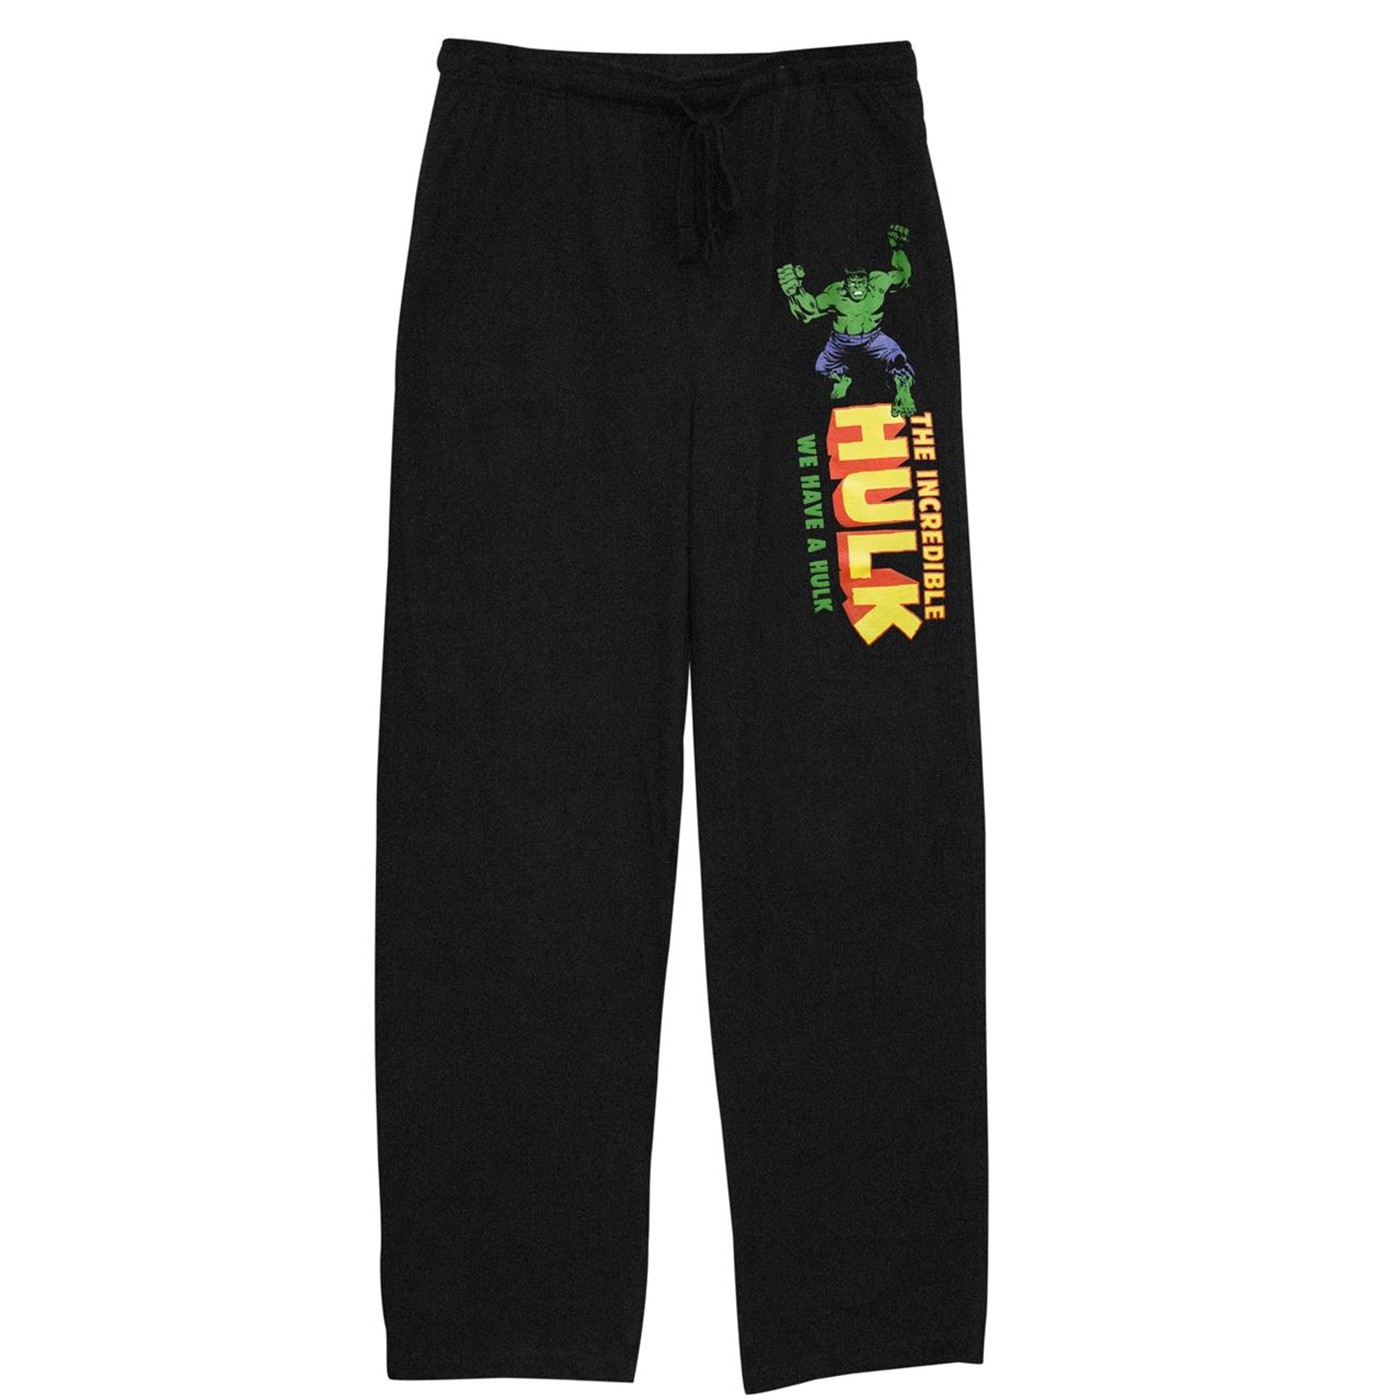 Incredible HULK Black Unisex Sleep Pants